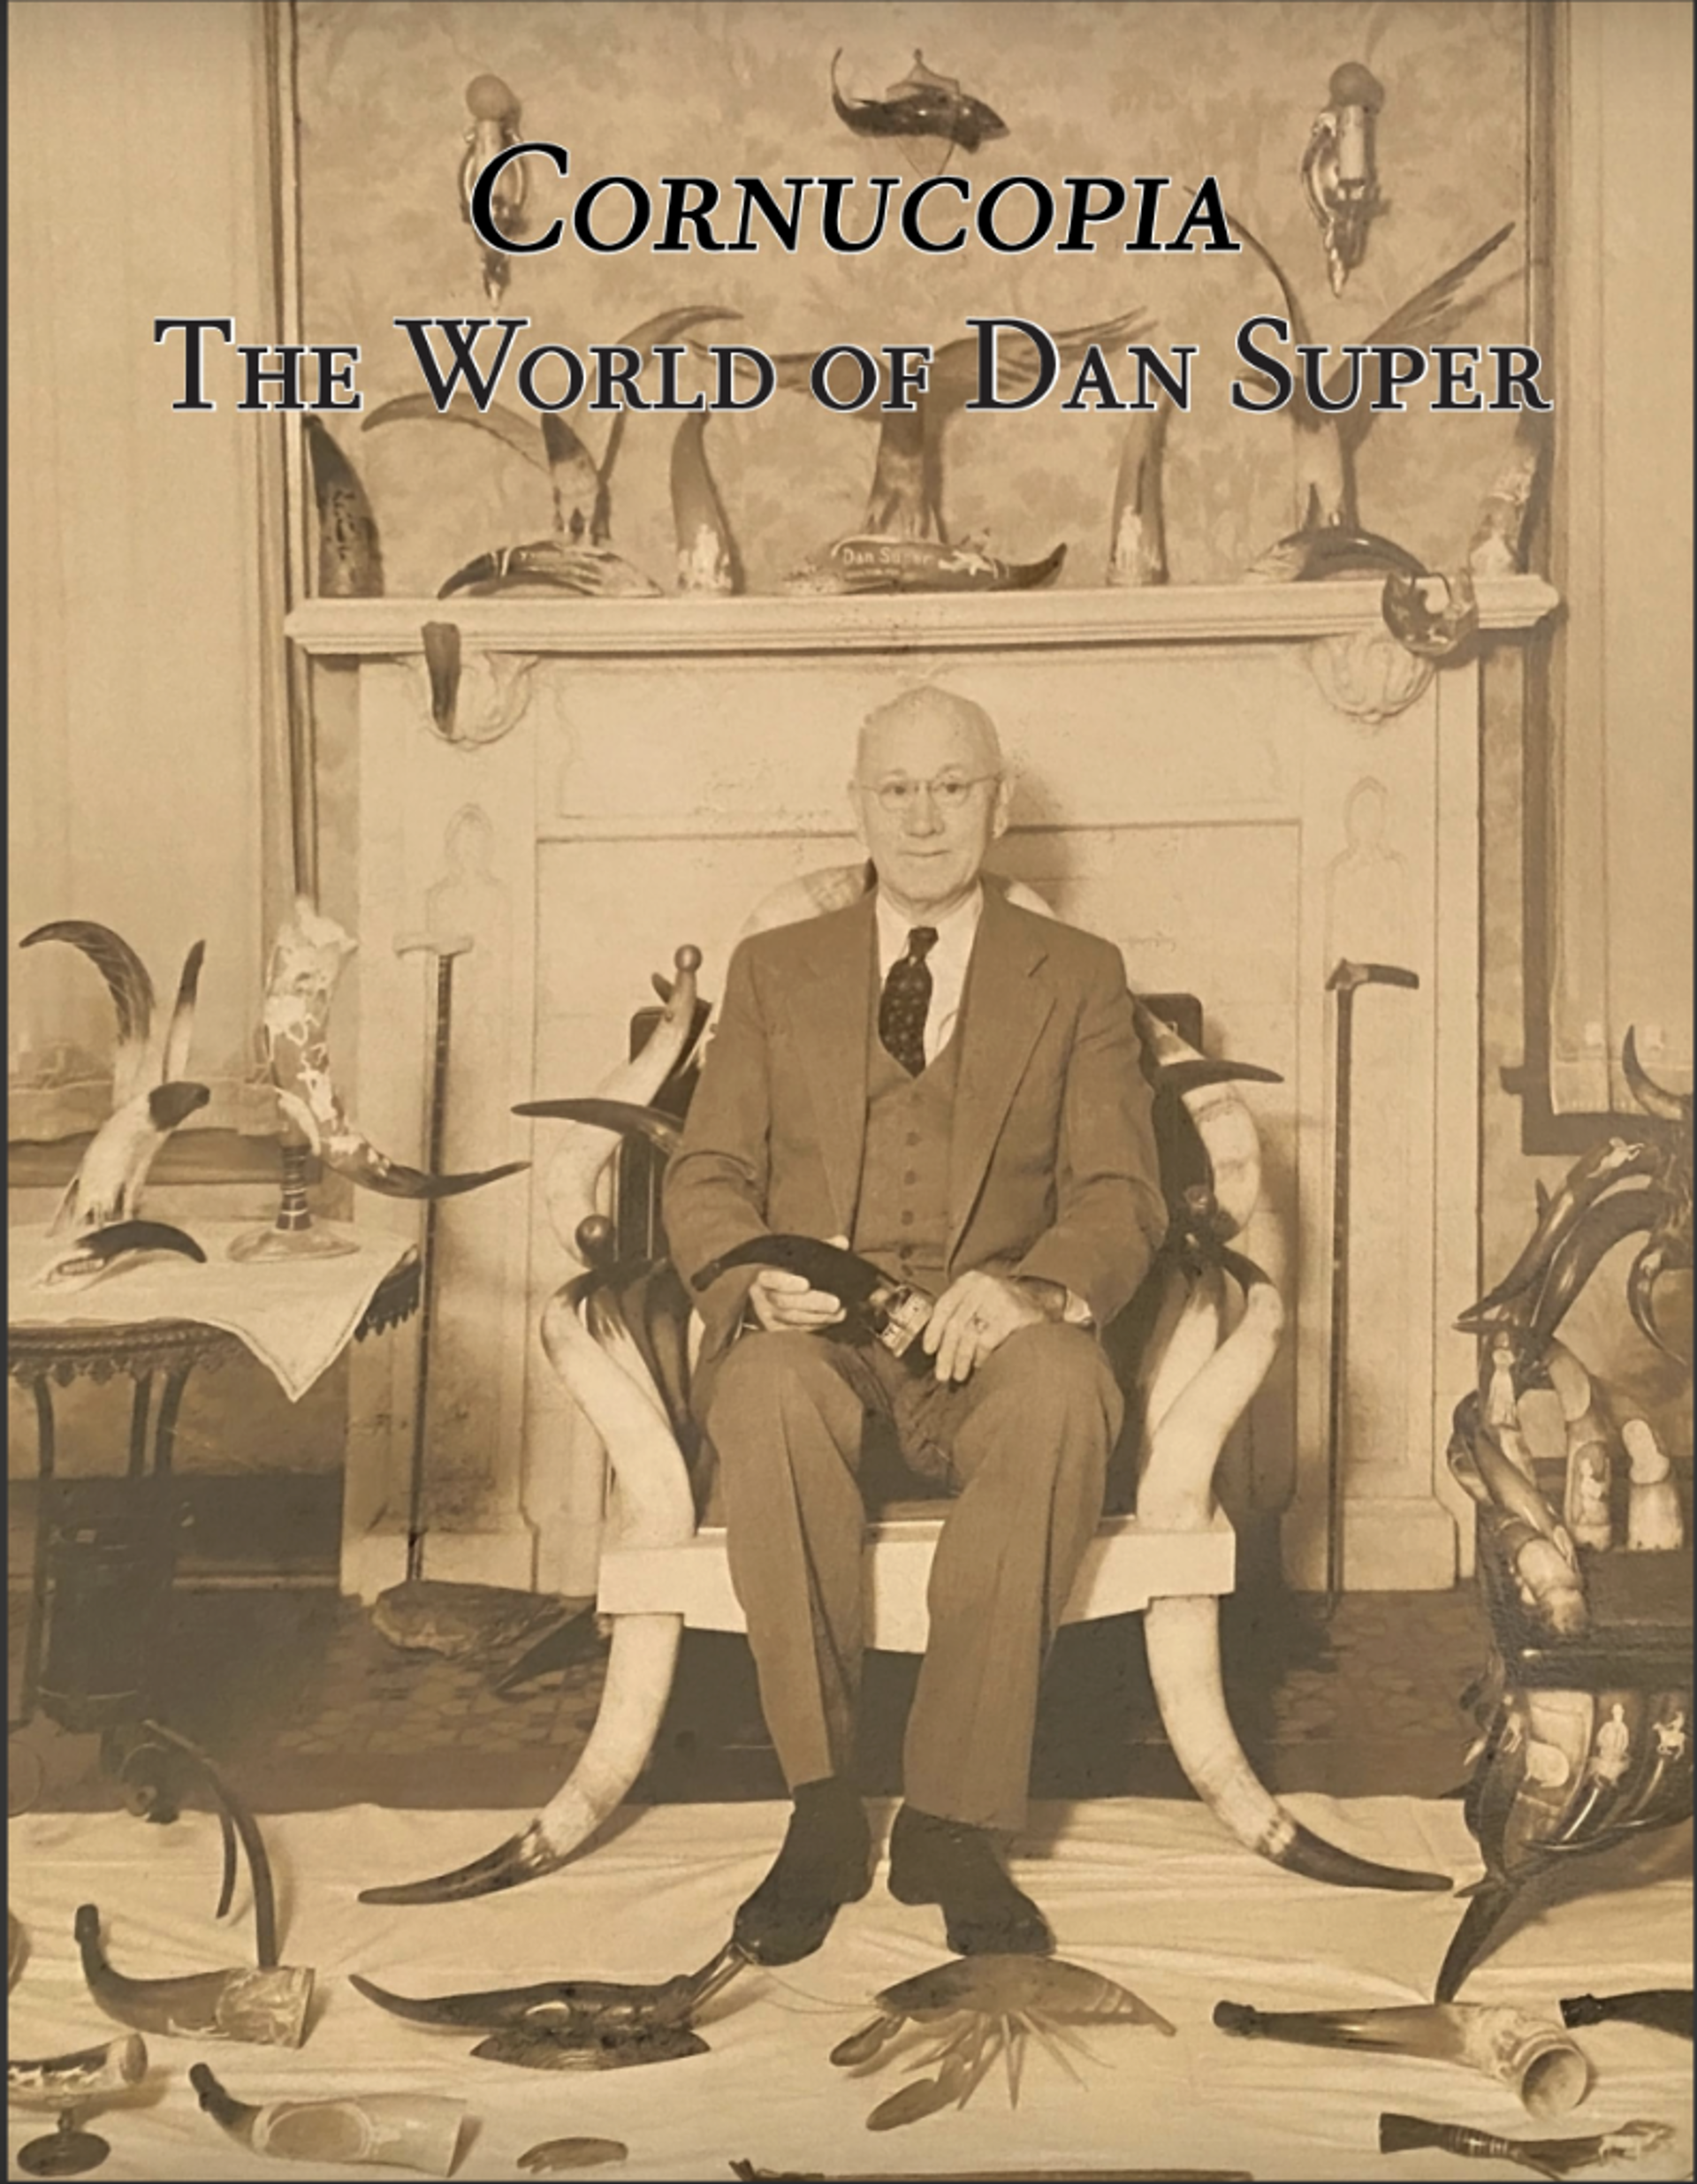 Cornucopia: The World of Dan Super, exhibition catalog by Publications